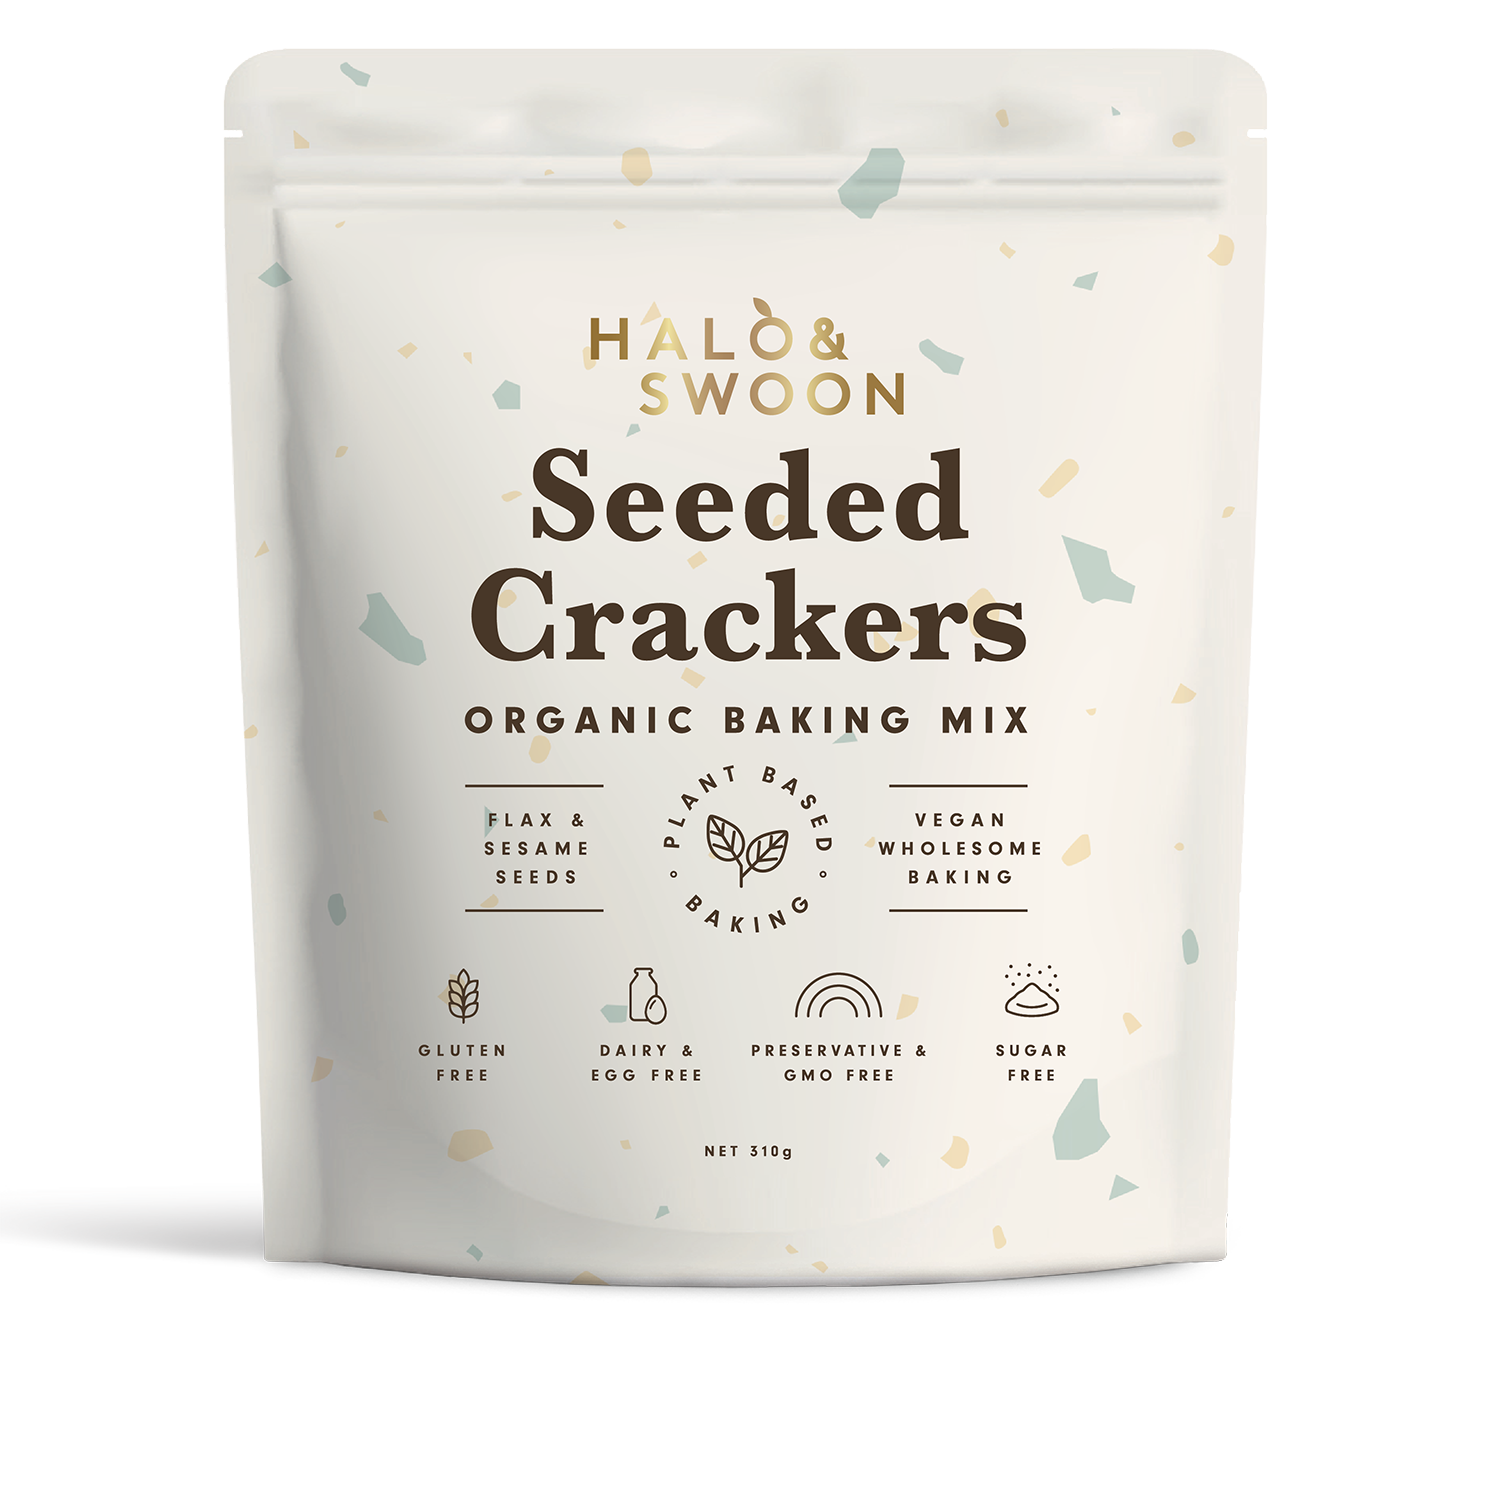 Halo & Swoon Seeded Crackers - organic, vegan, gluten-free baking mix